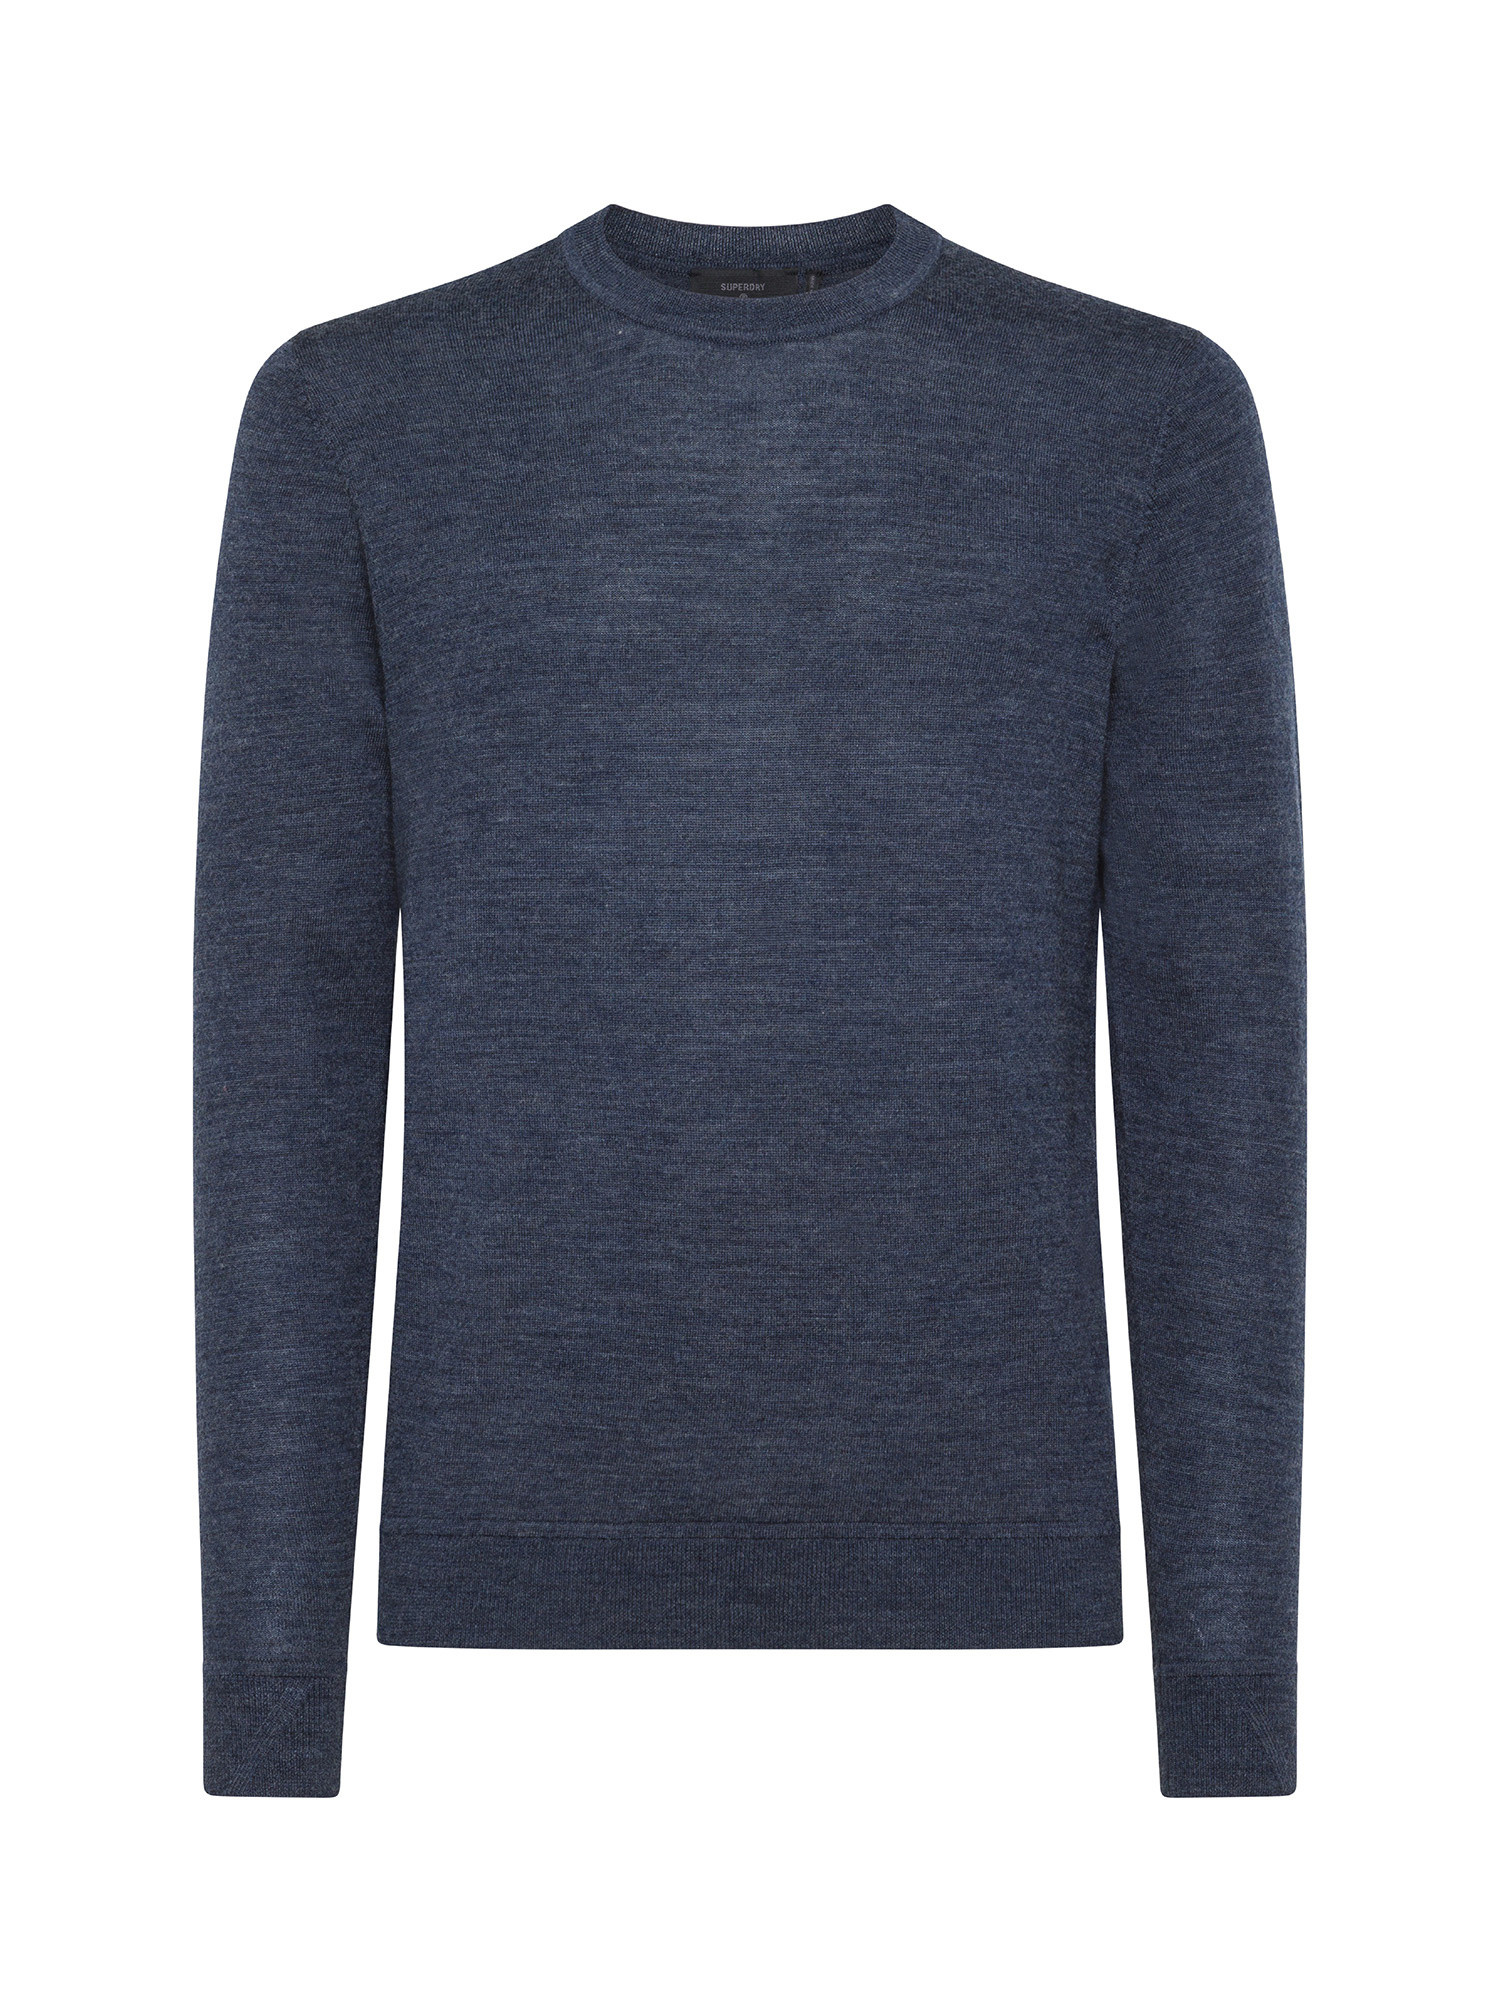 Superdry - Merino wool crewneck sweater, Dark Blue, large image number 0